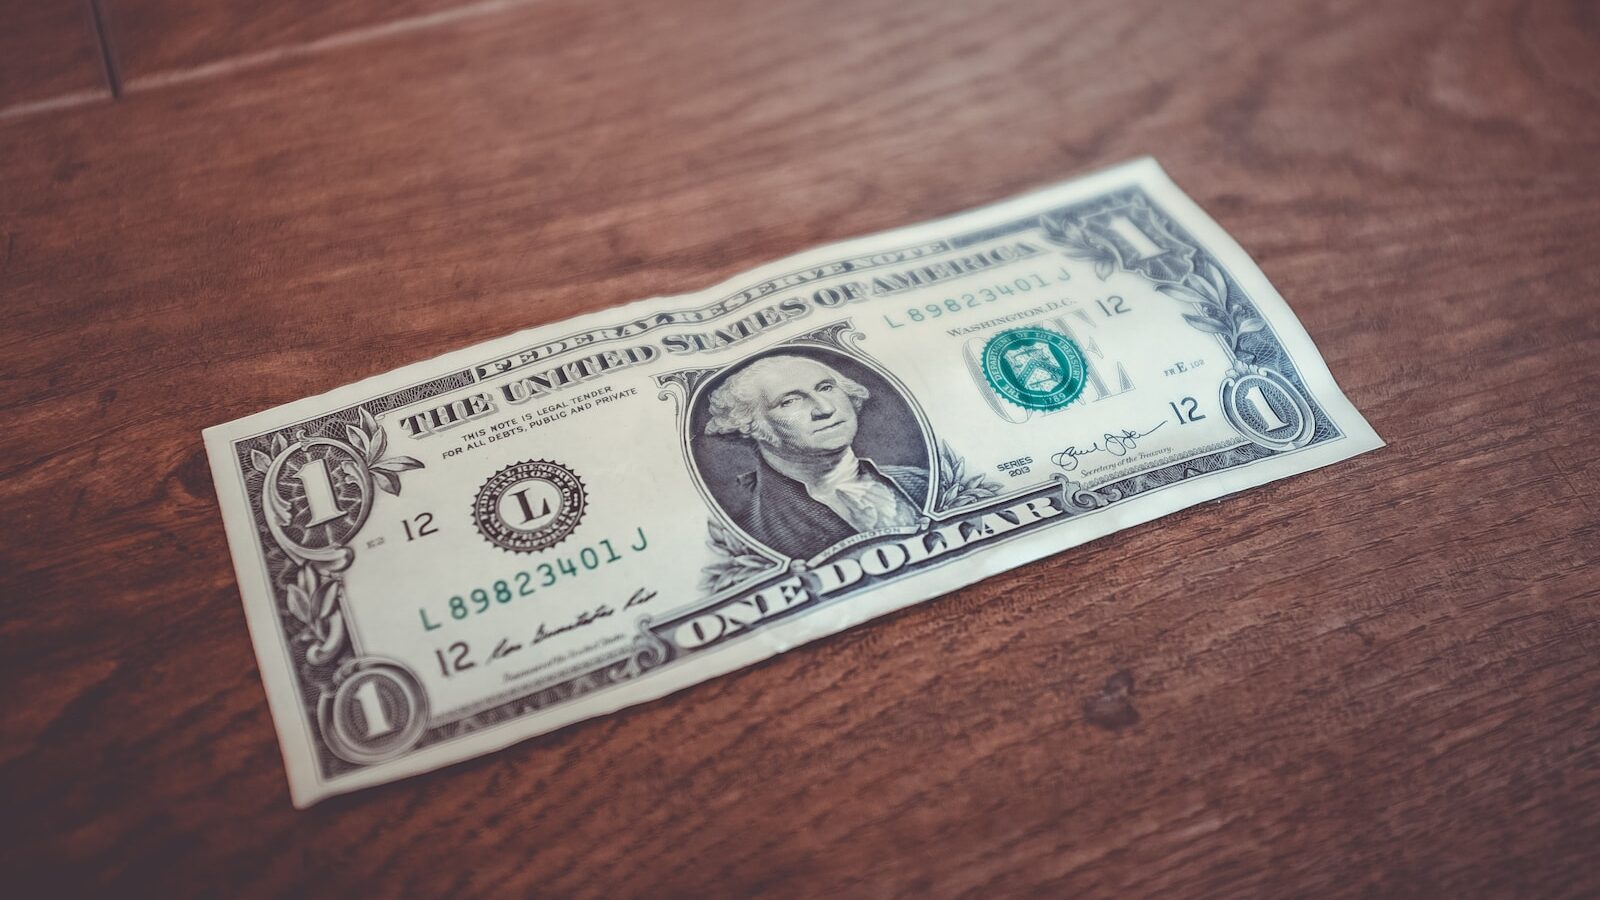 1 US dollar banknote close-up photography